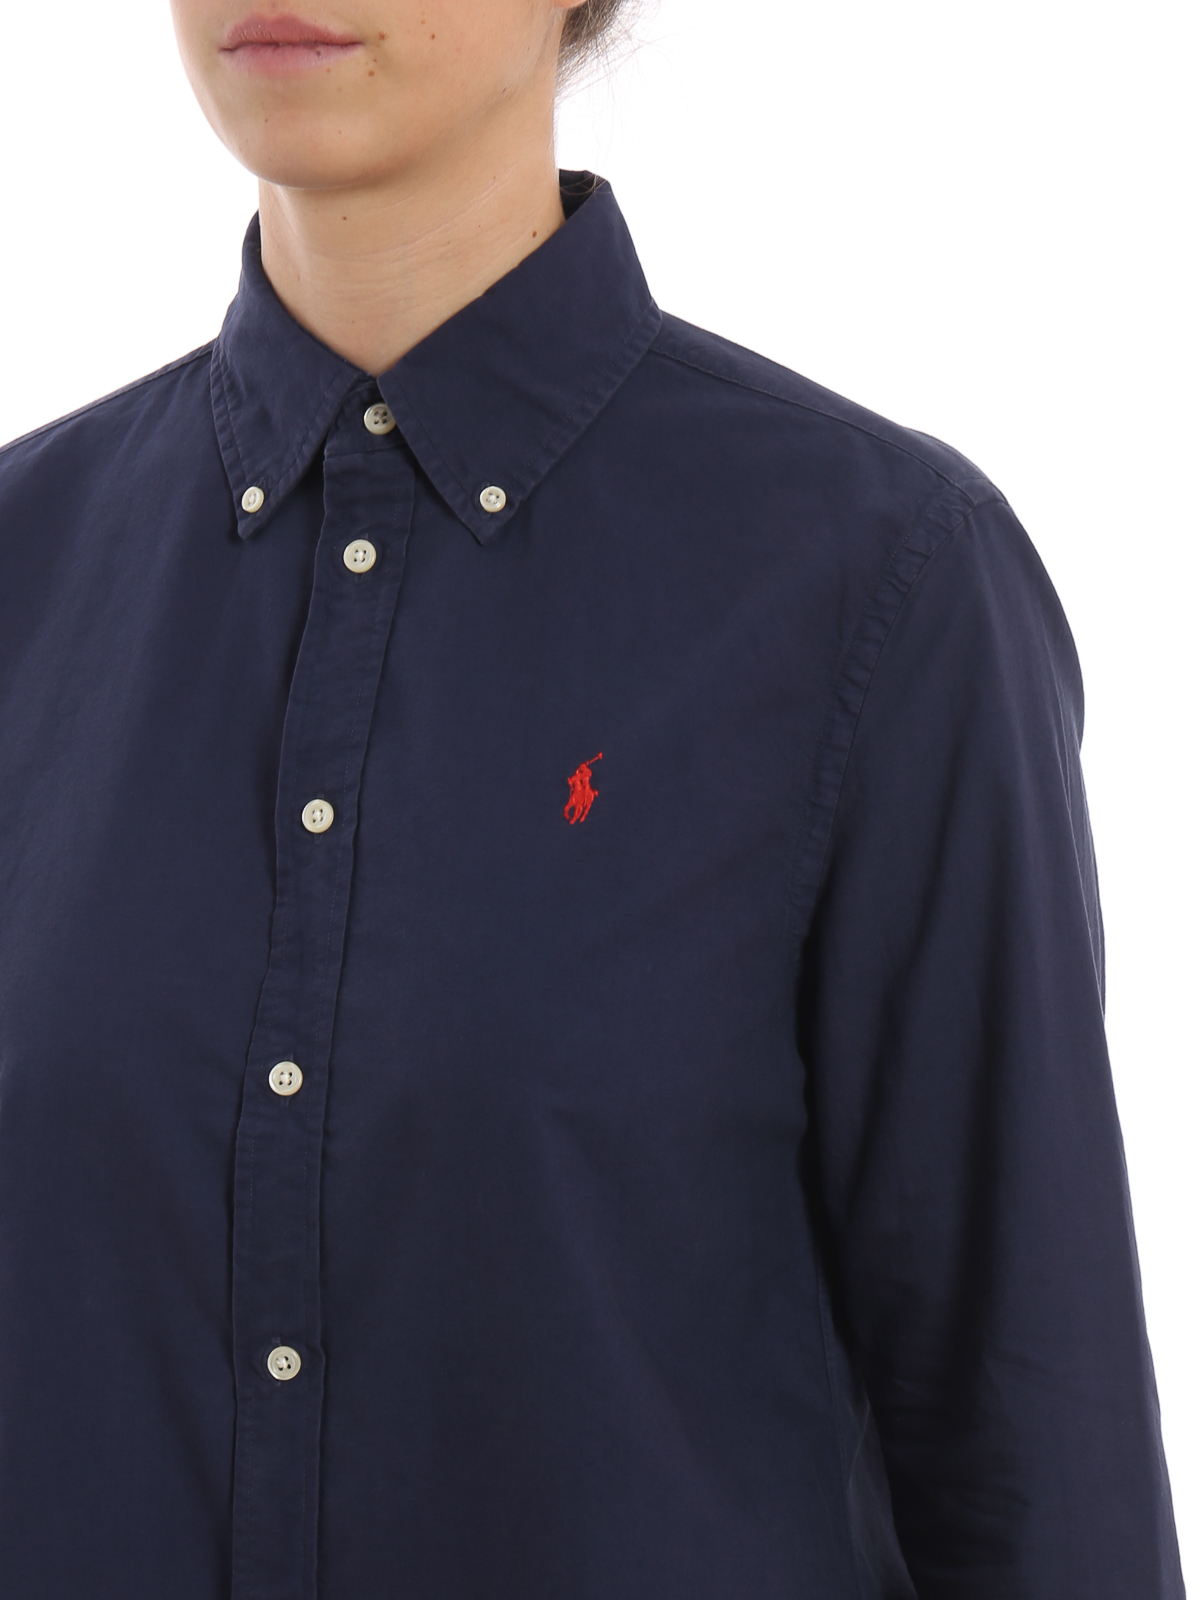 Shirts Polo Ralph Lauren - Oxford dark blue button-down shirt - 211732598001